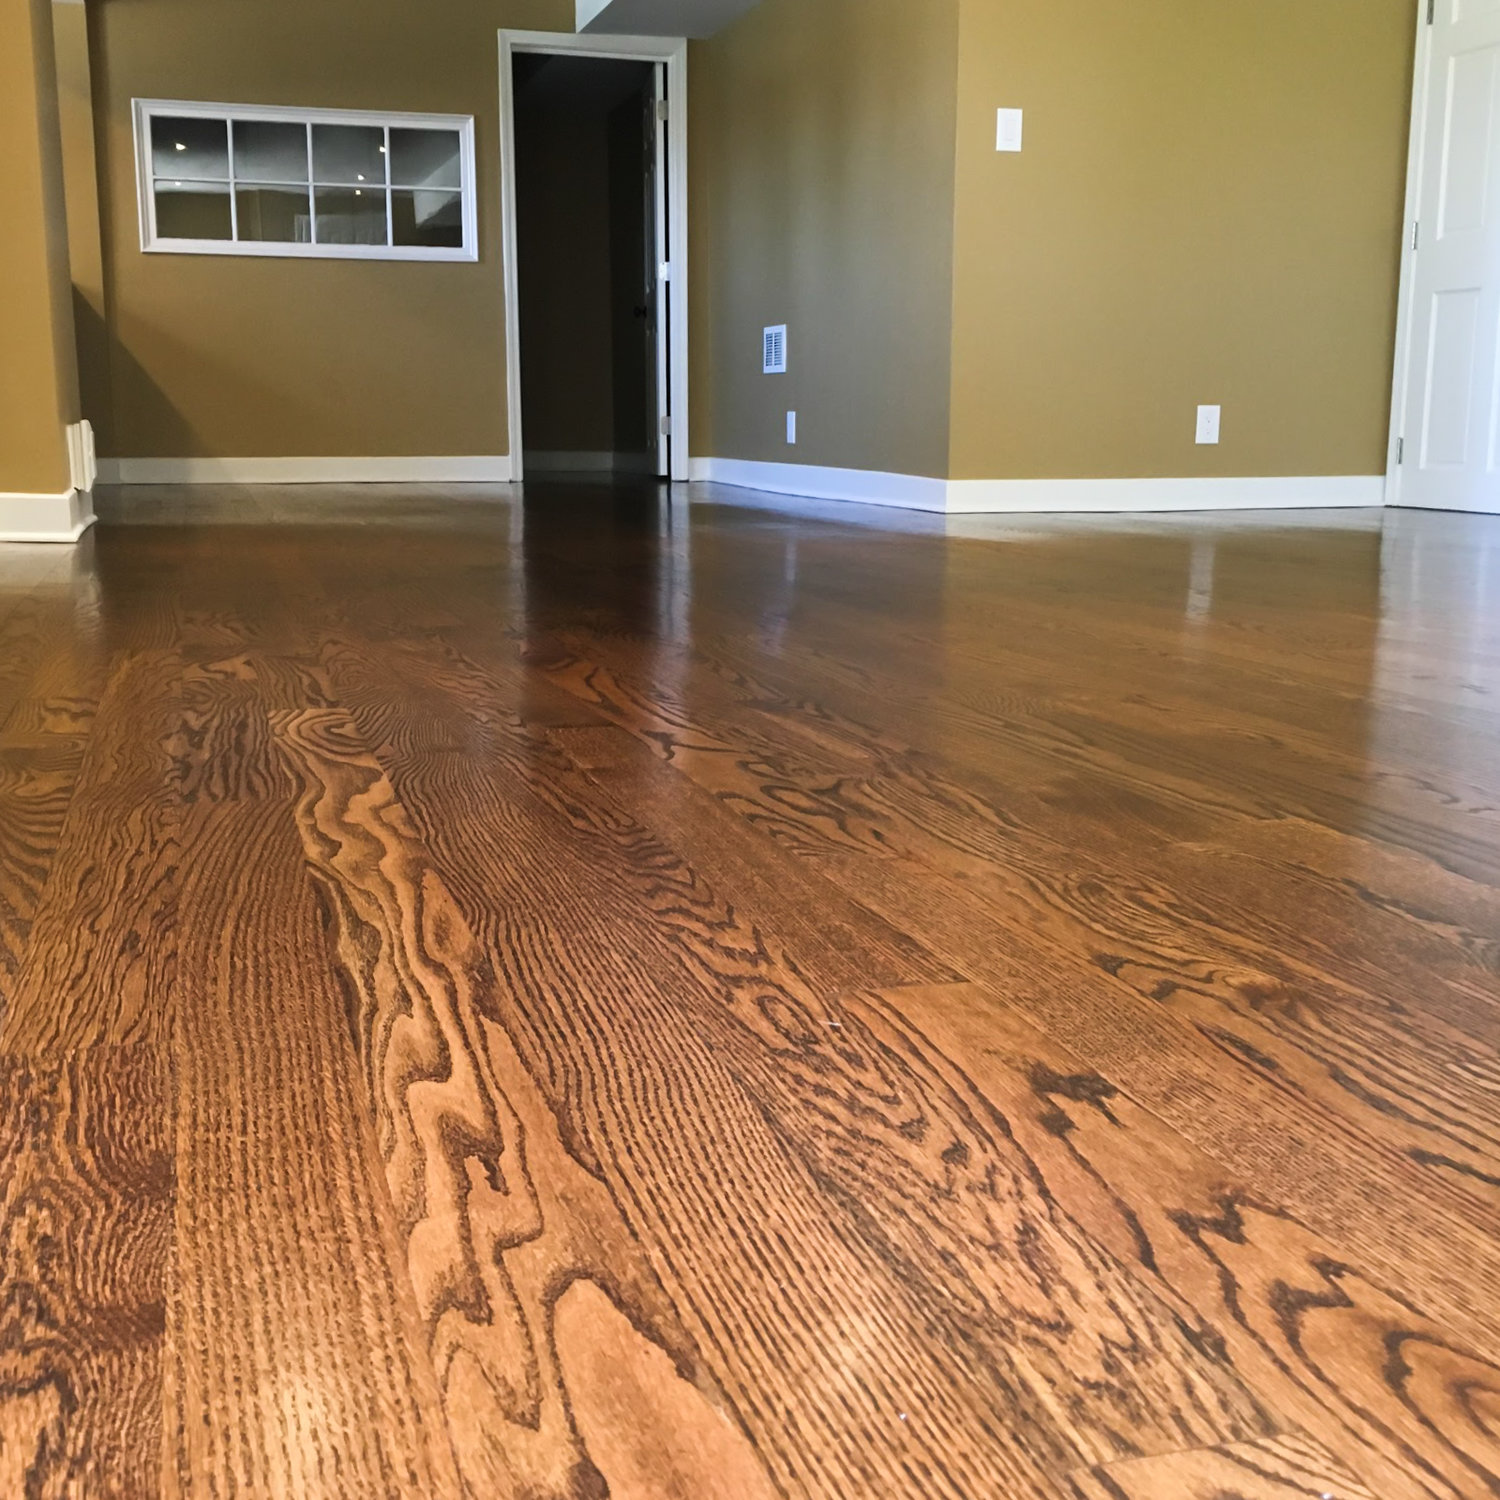 Precision Hardwood Floors